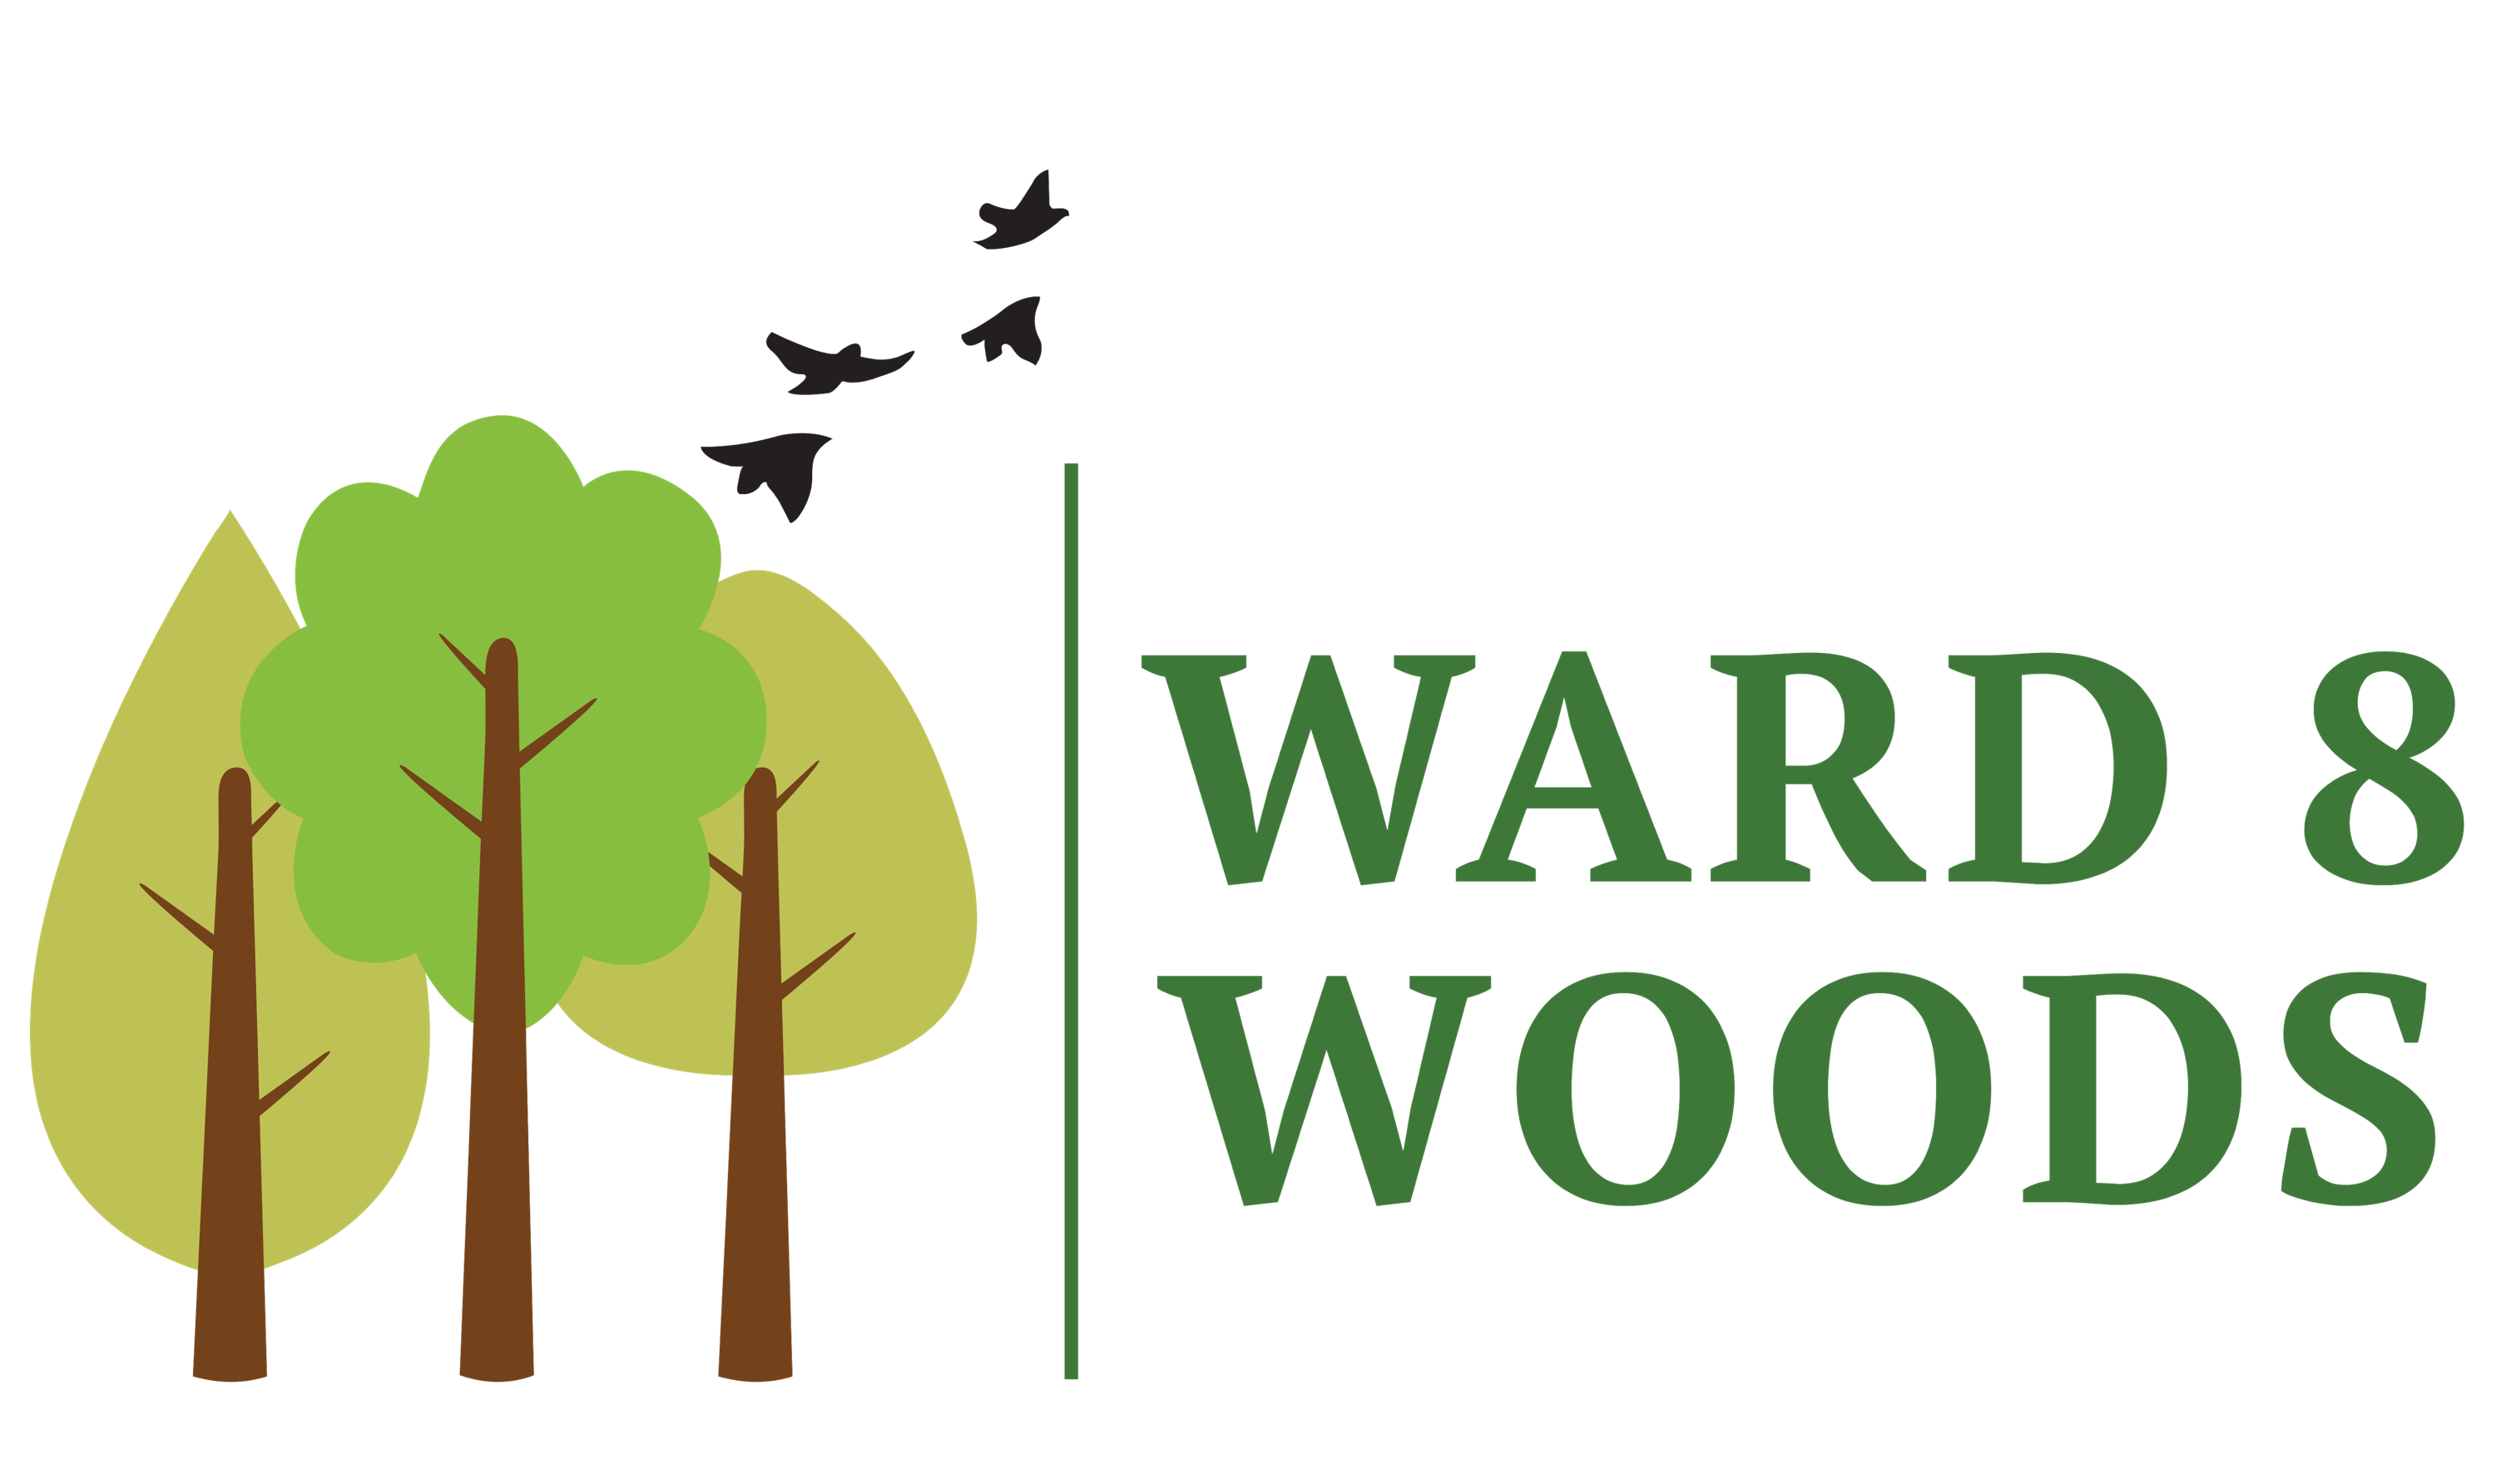 Ward 8 Woods